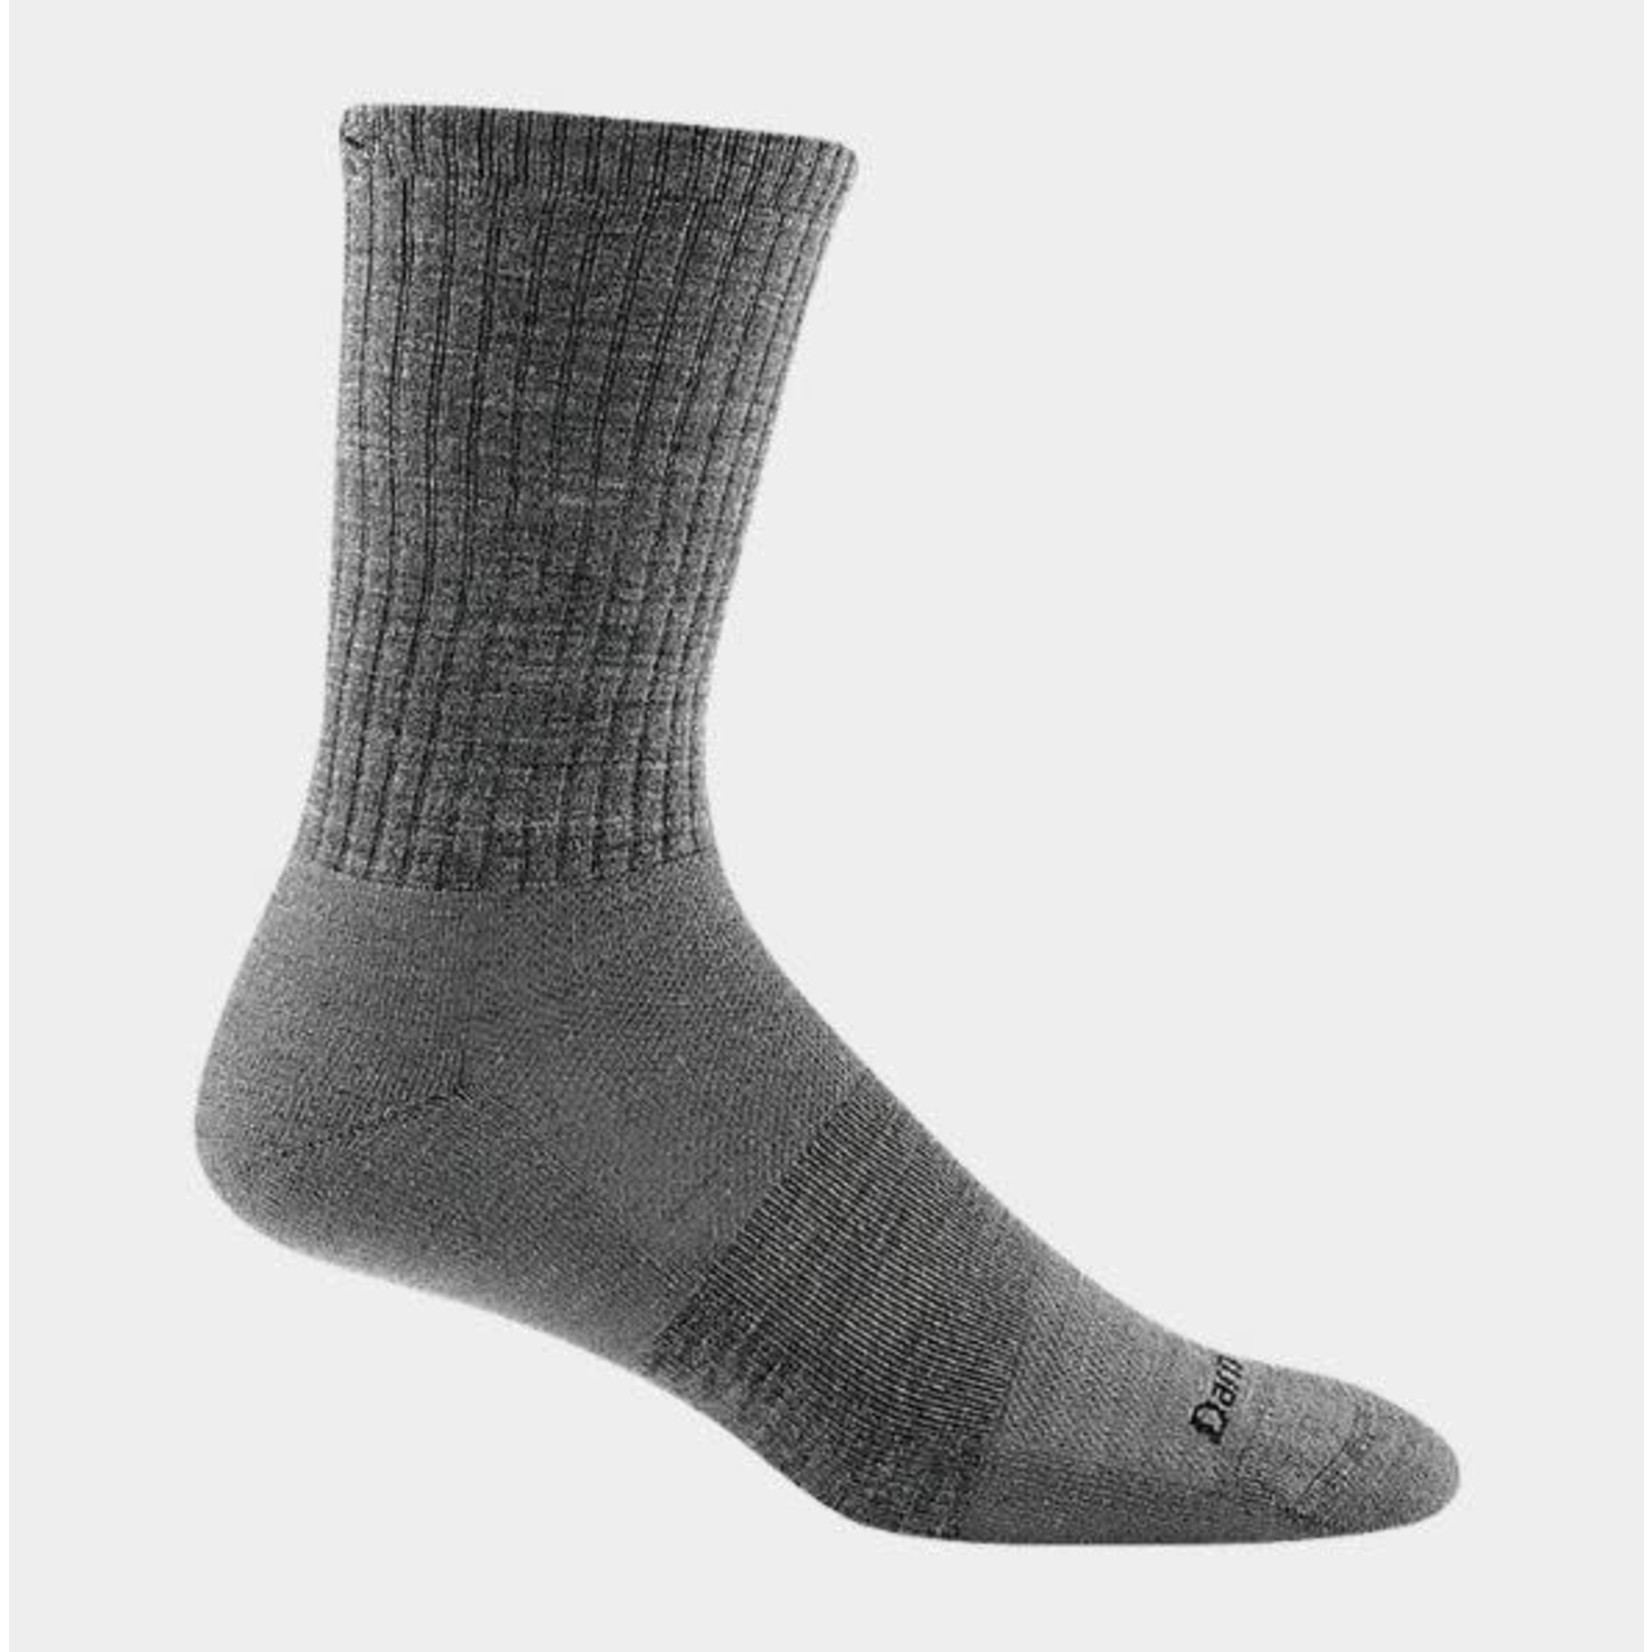 Darn Tough Socks Darn Tough Socks Merino Wool Crew Lifestyle Light w/Cushion 1957